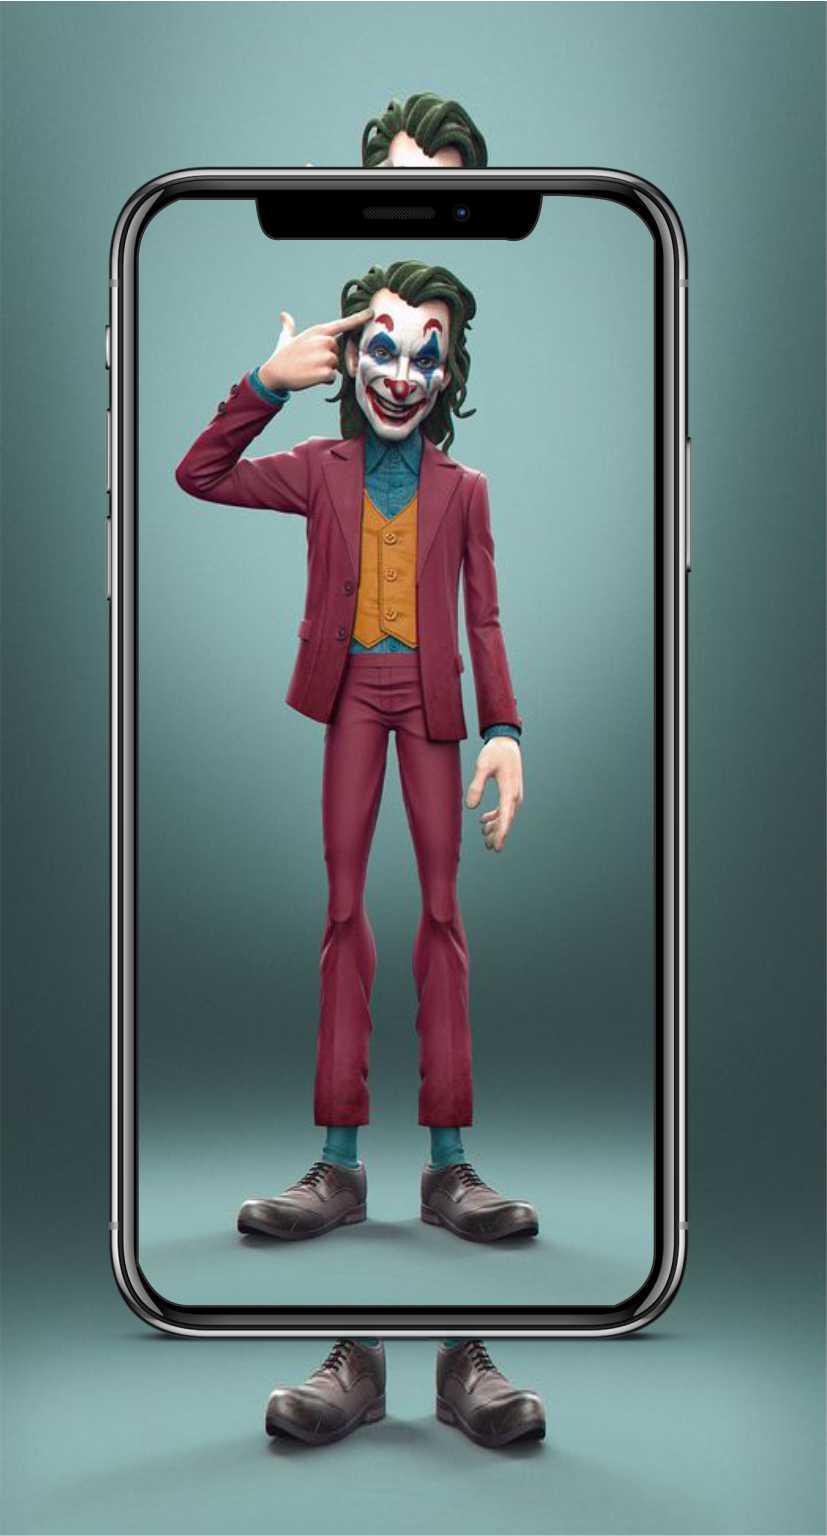 New Wallpaper 4k Joker 2019 For Android Apk Download - roblox 2019 joker